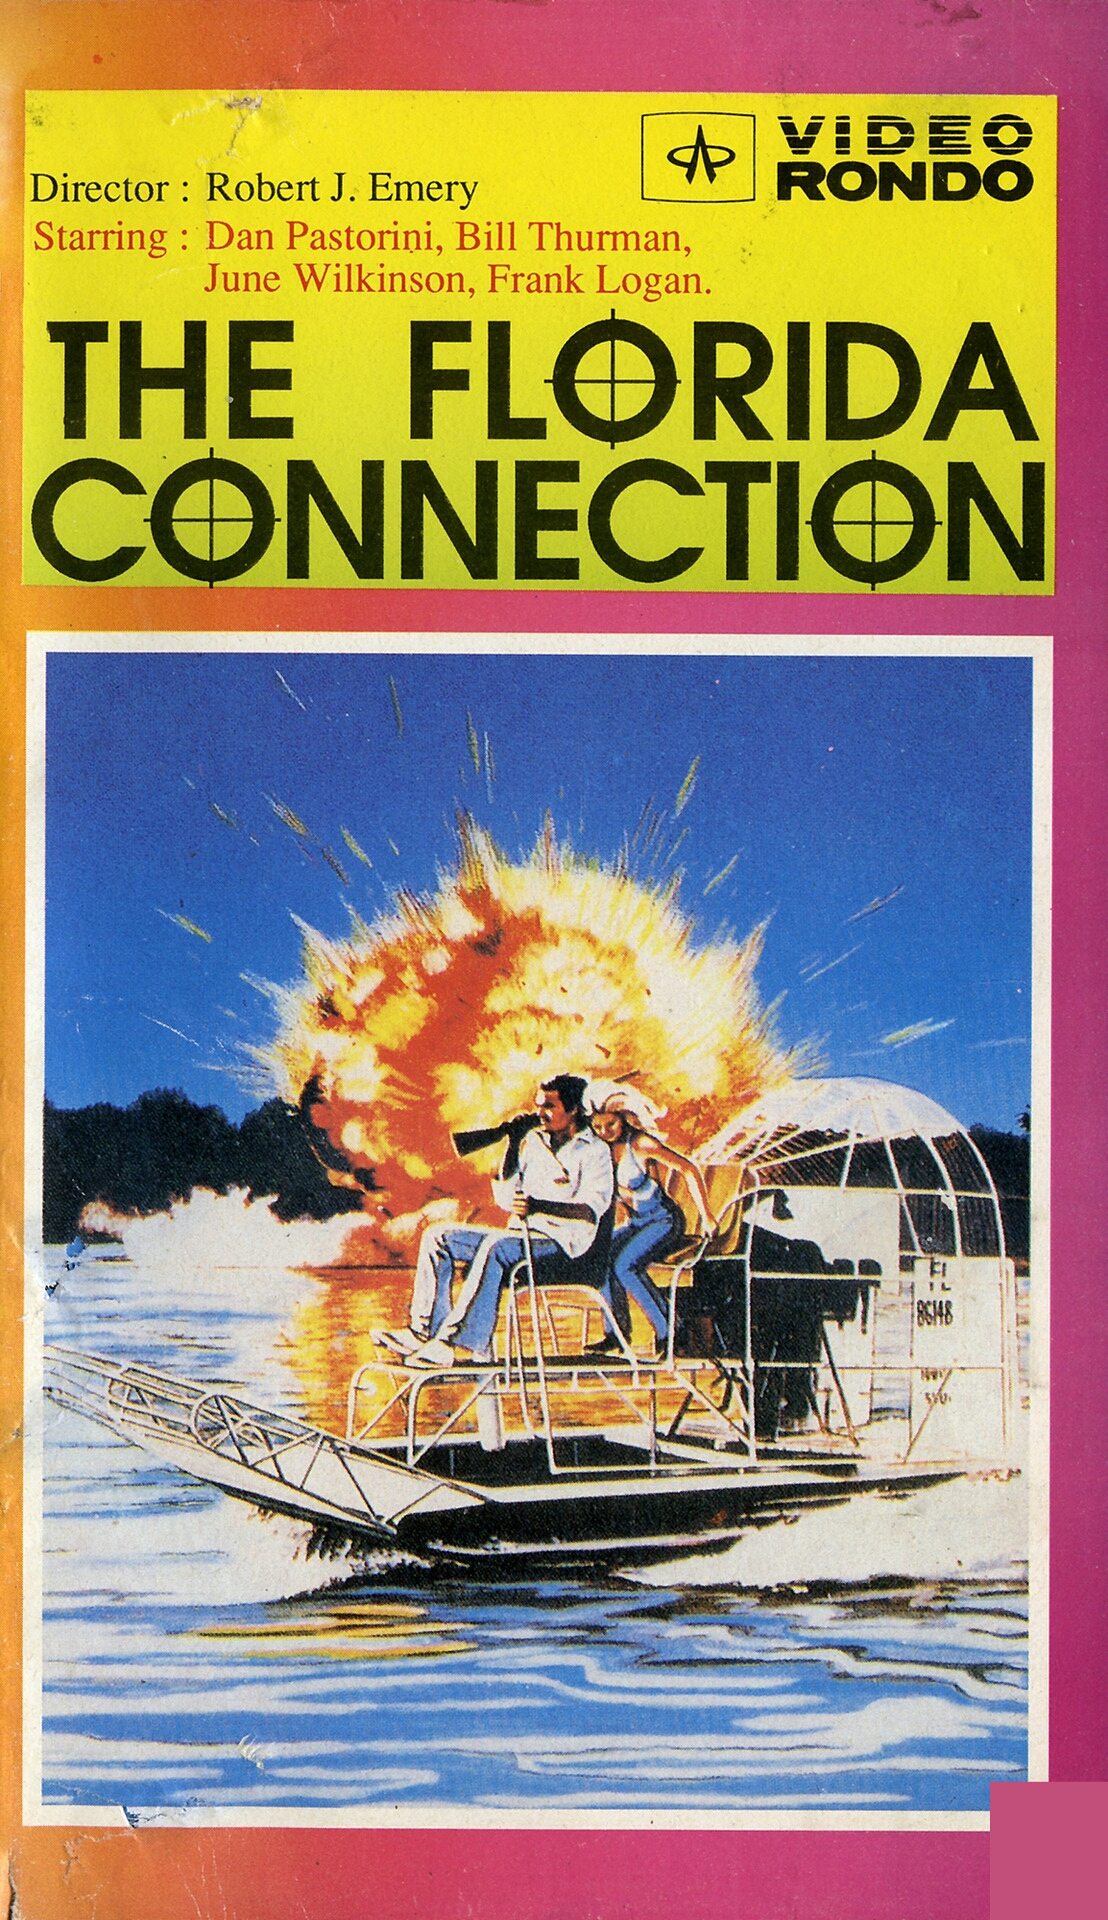 The Florida Connection (1975) Screenshot 1 